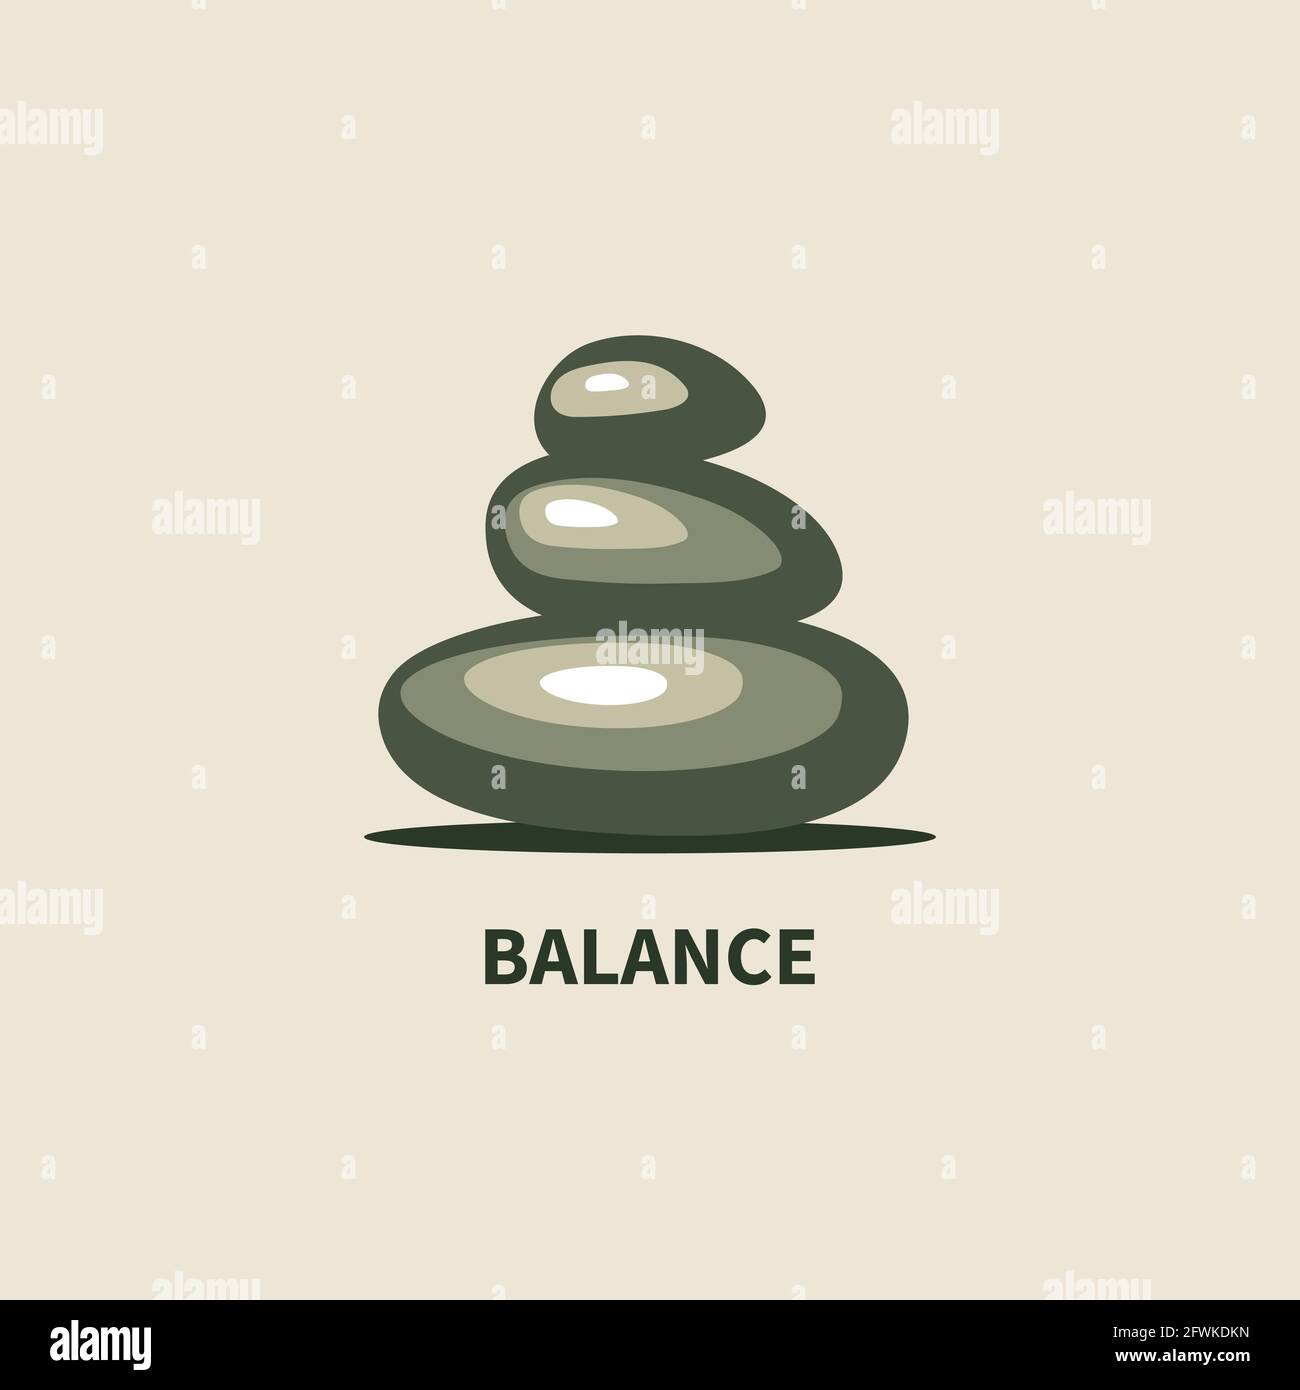 Balance icon. Harmony symbol. Stack of stones. Buddhism concept